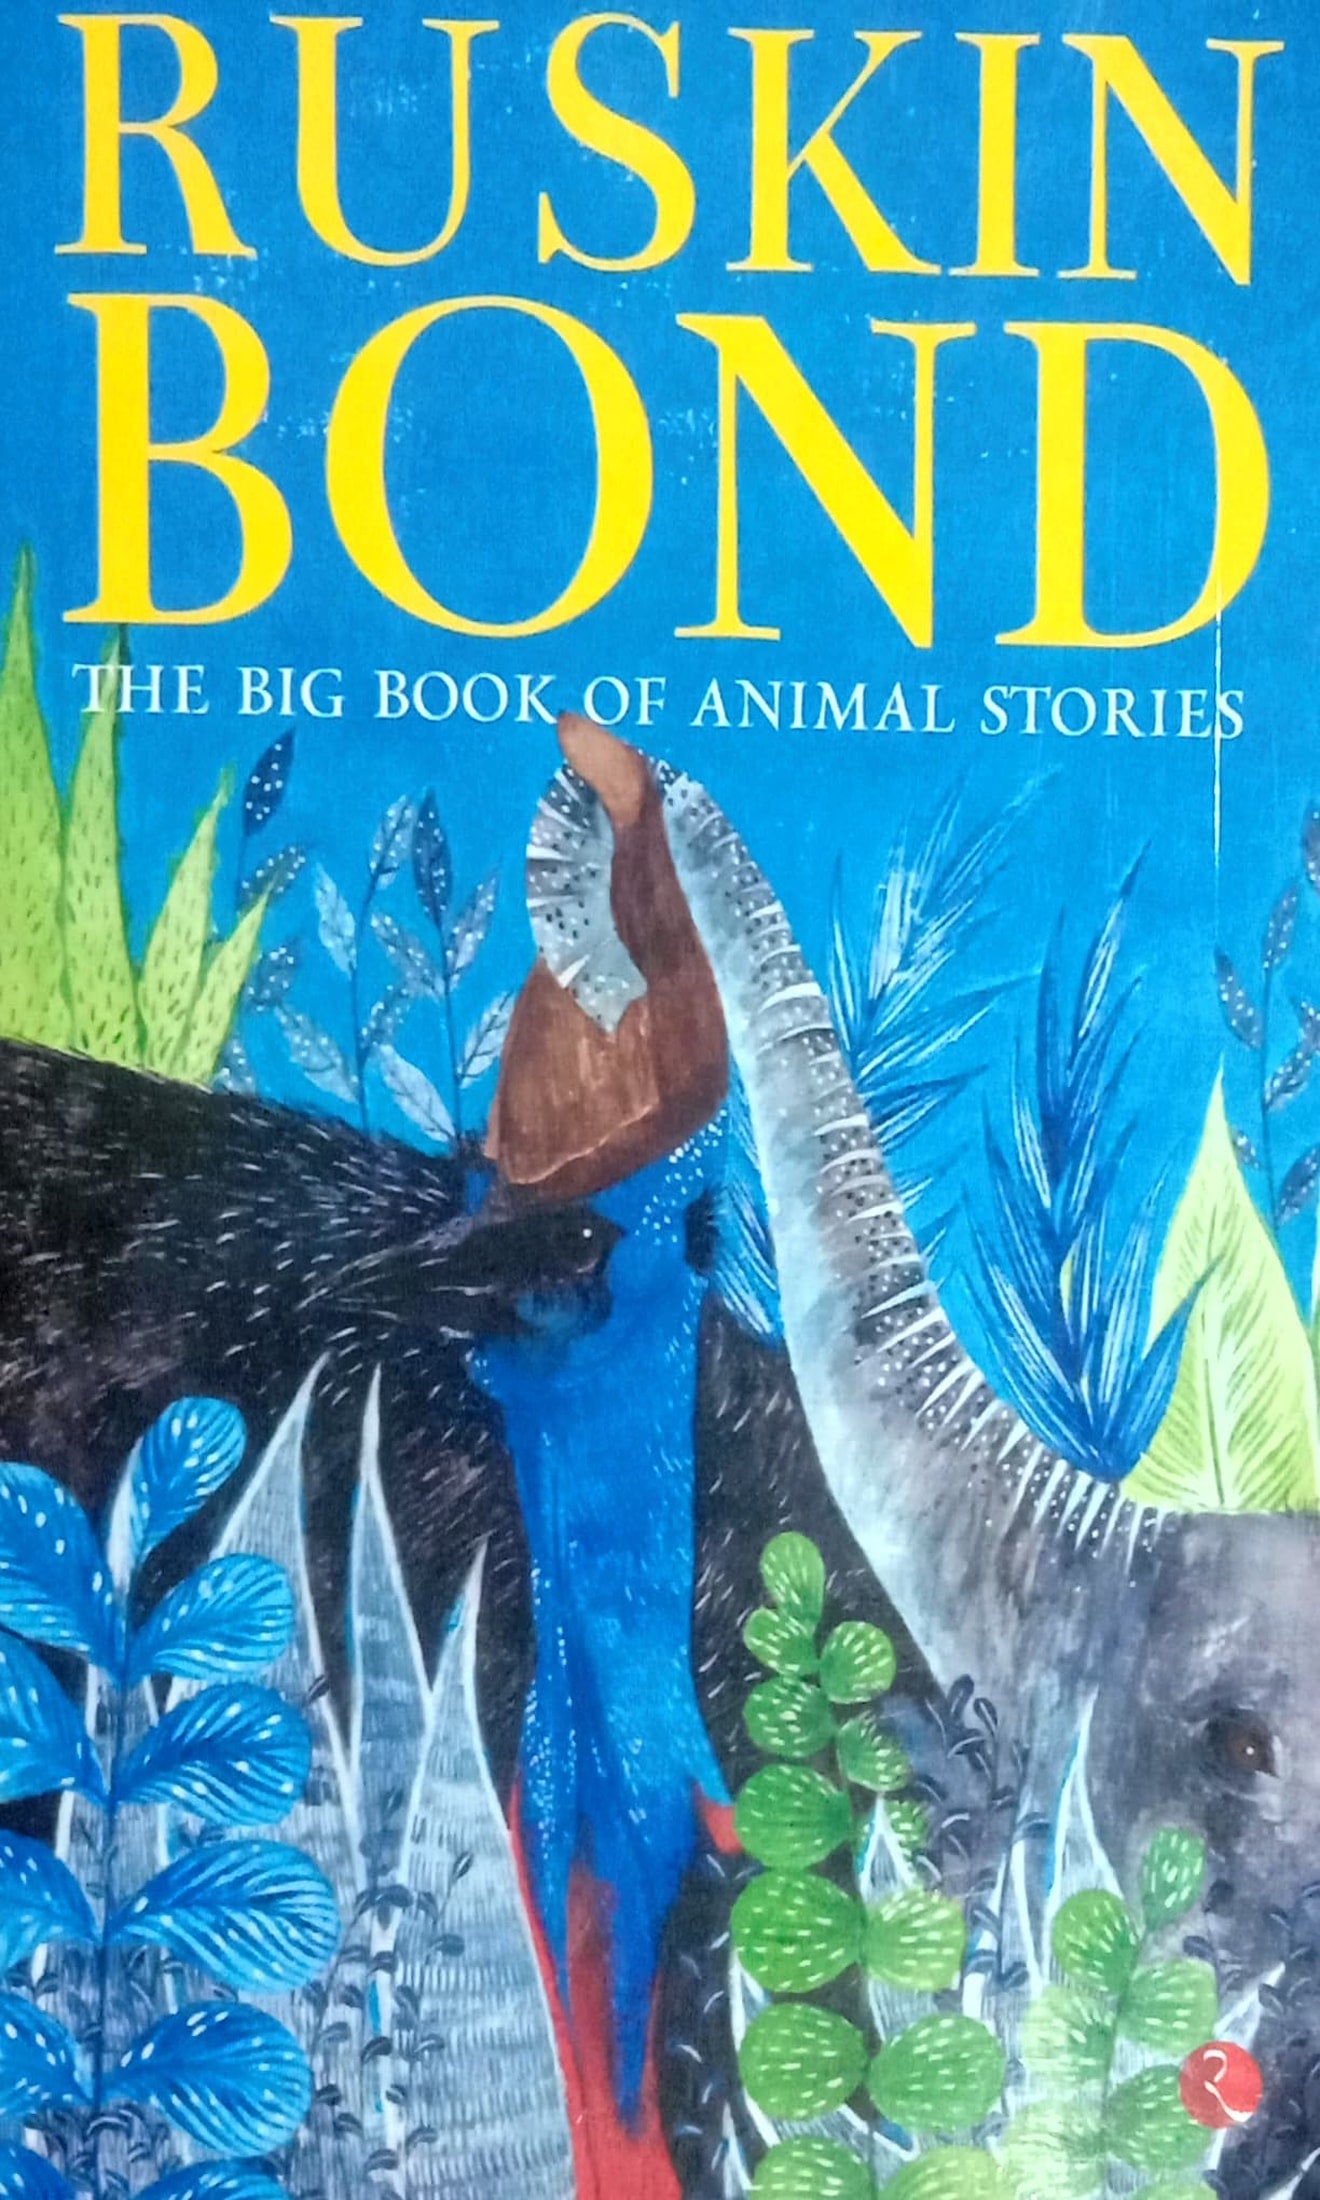 RUSKIN BOND - THE BIG BOOK OF ANIMAL STORIES